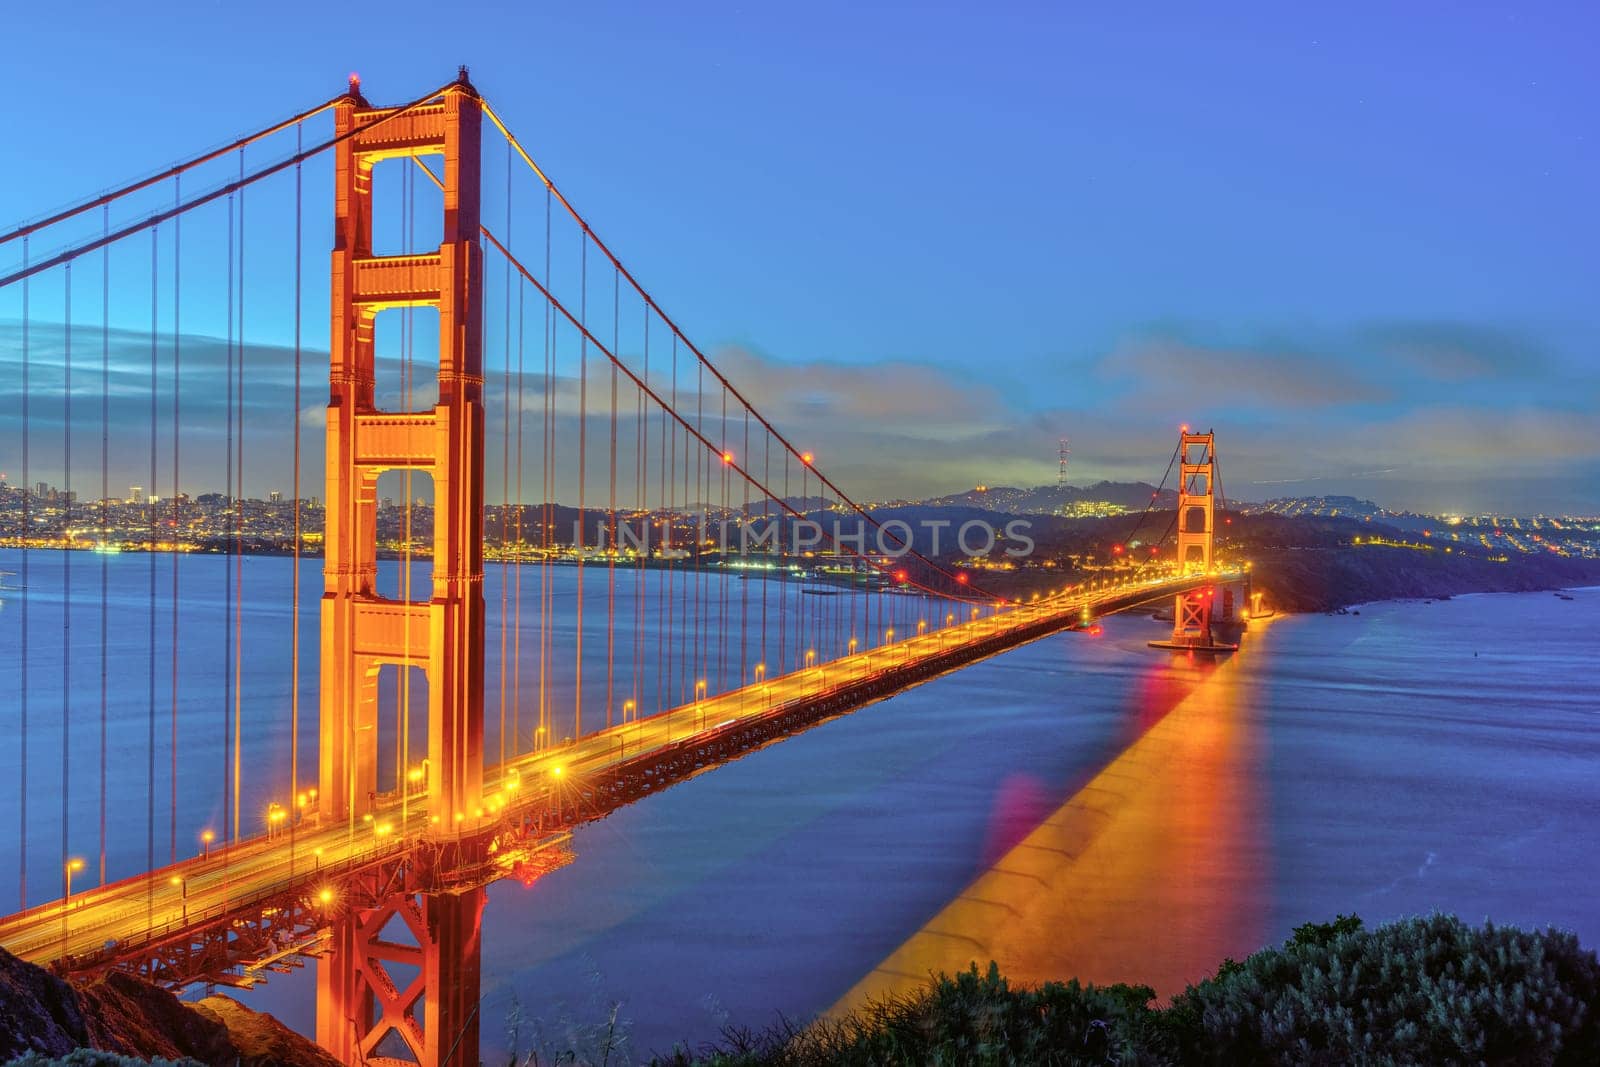 The iconic Golden Gate Bridge in San Francisco at twilight